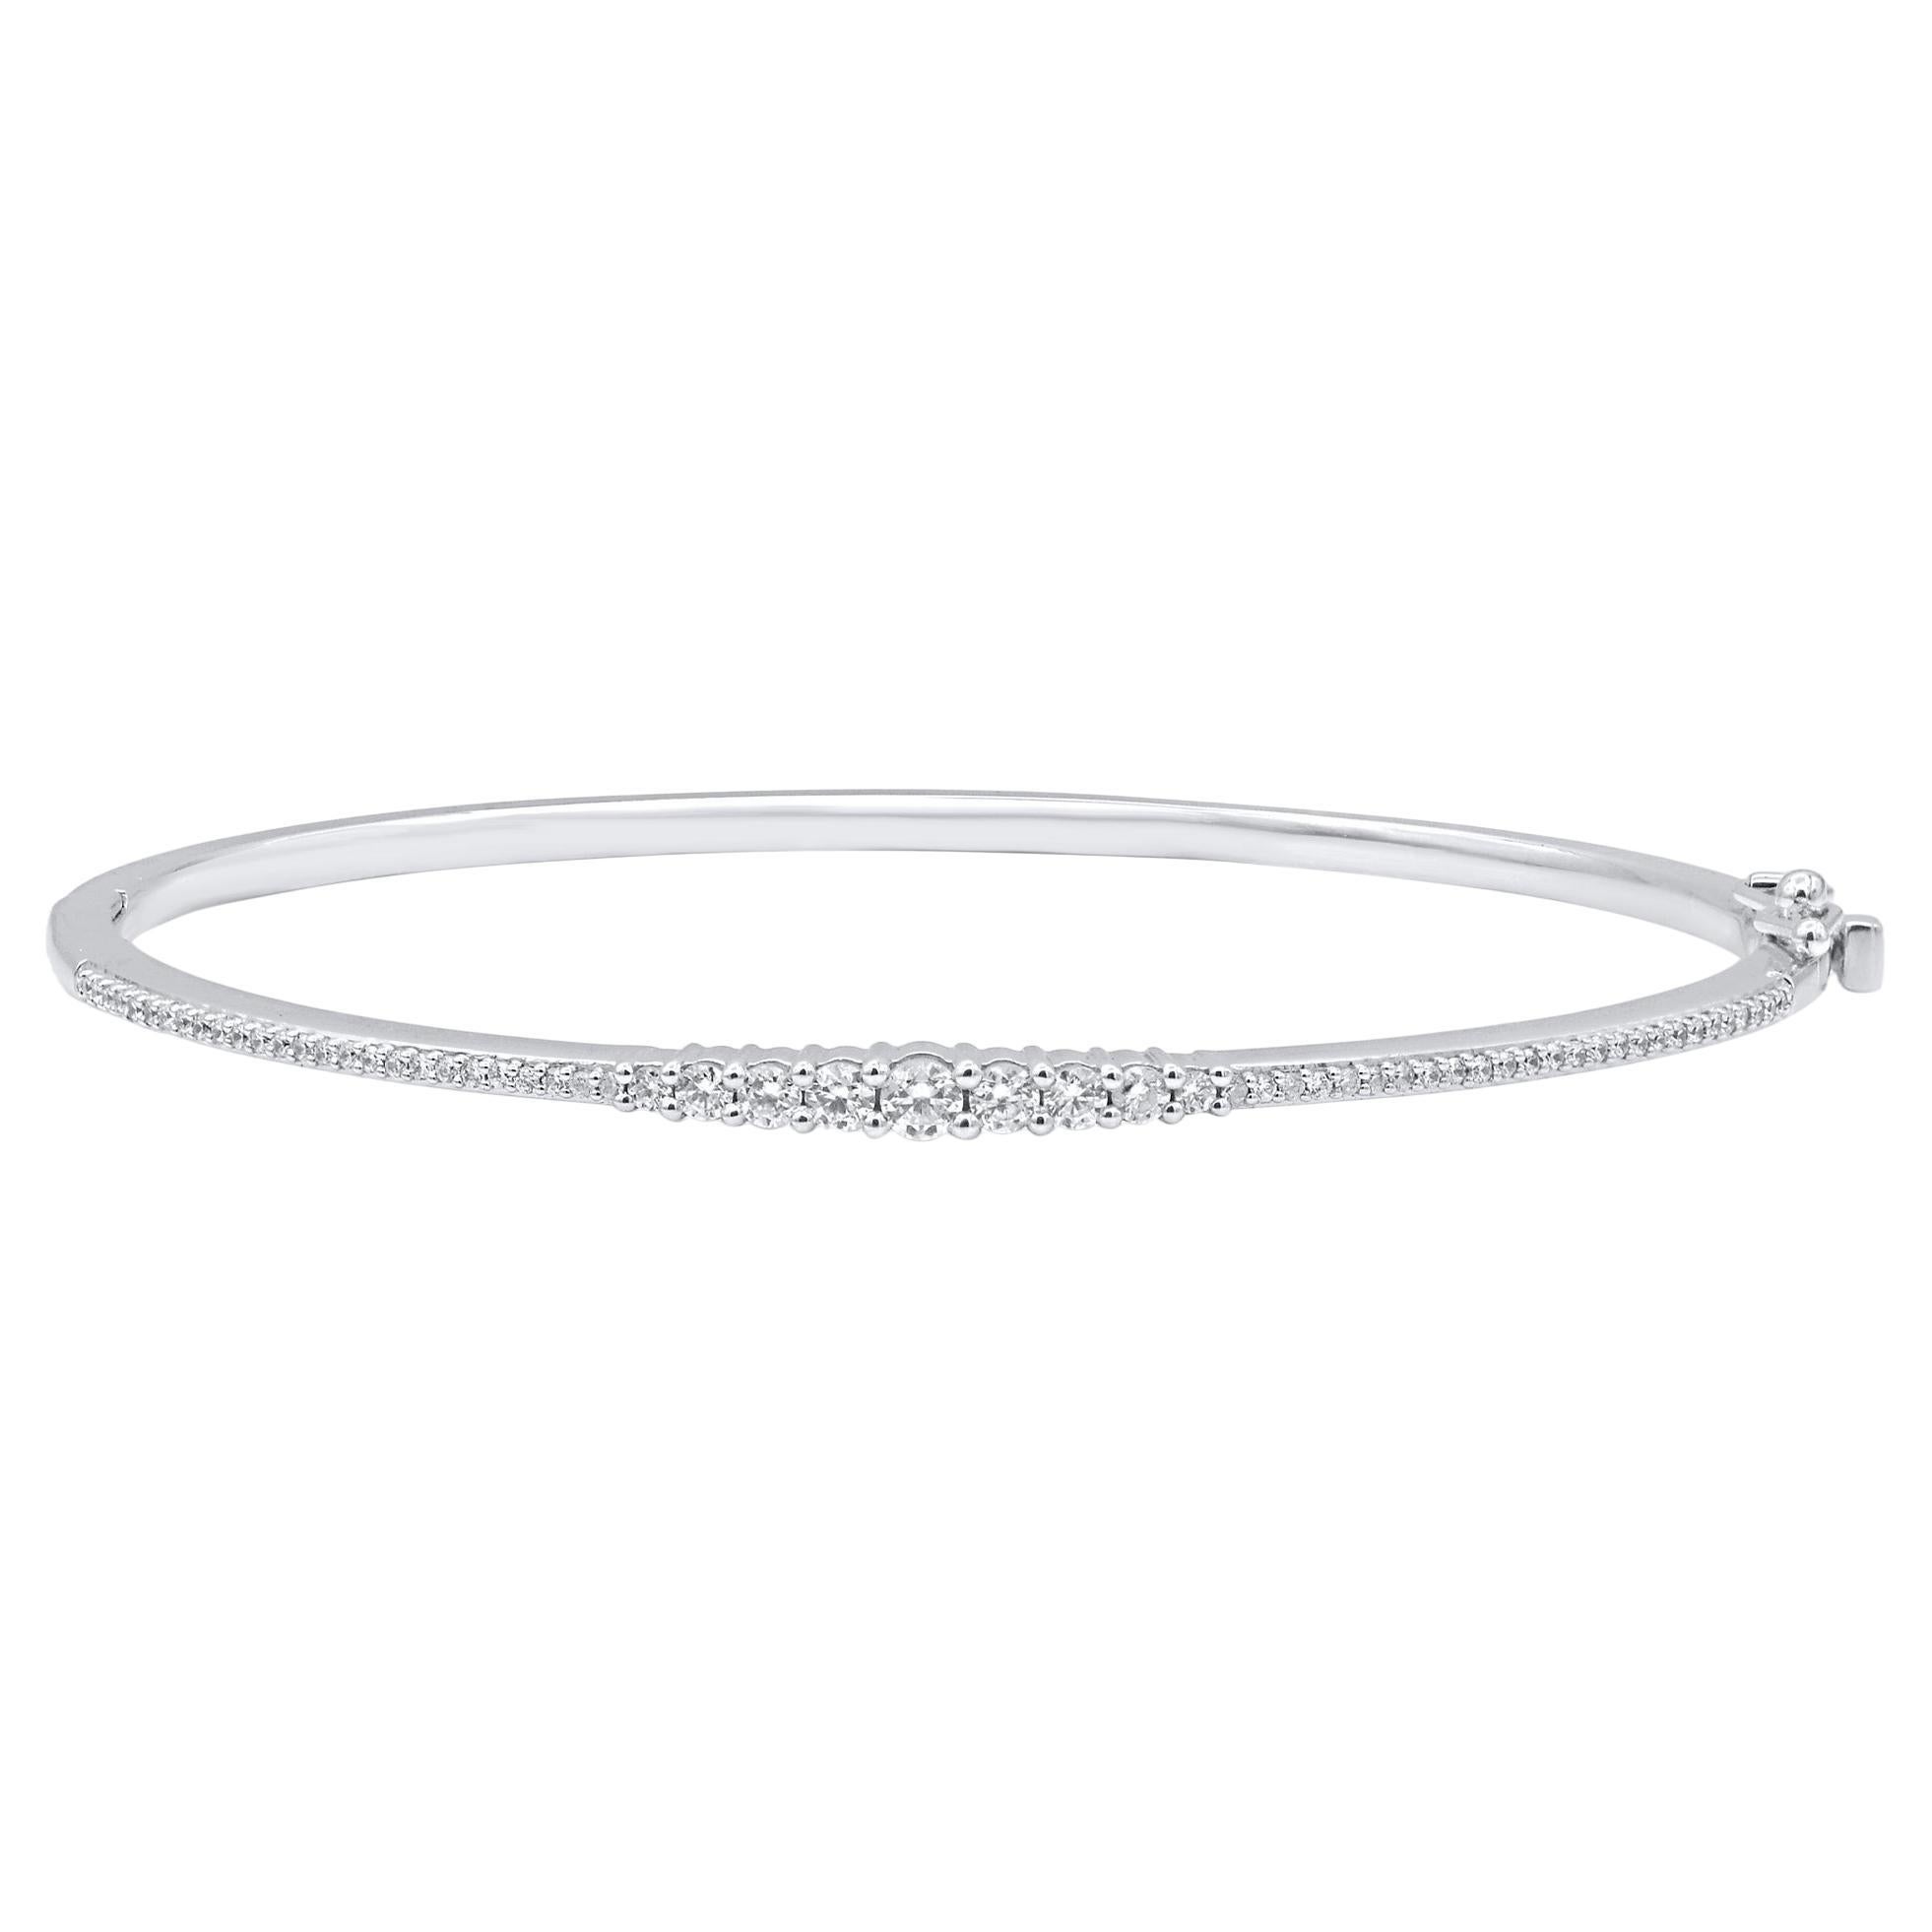 TJD 0.50 Carat Natural Round Diamond Bangle Bracelet in 18KT White Gold For Sale